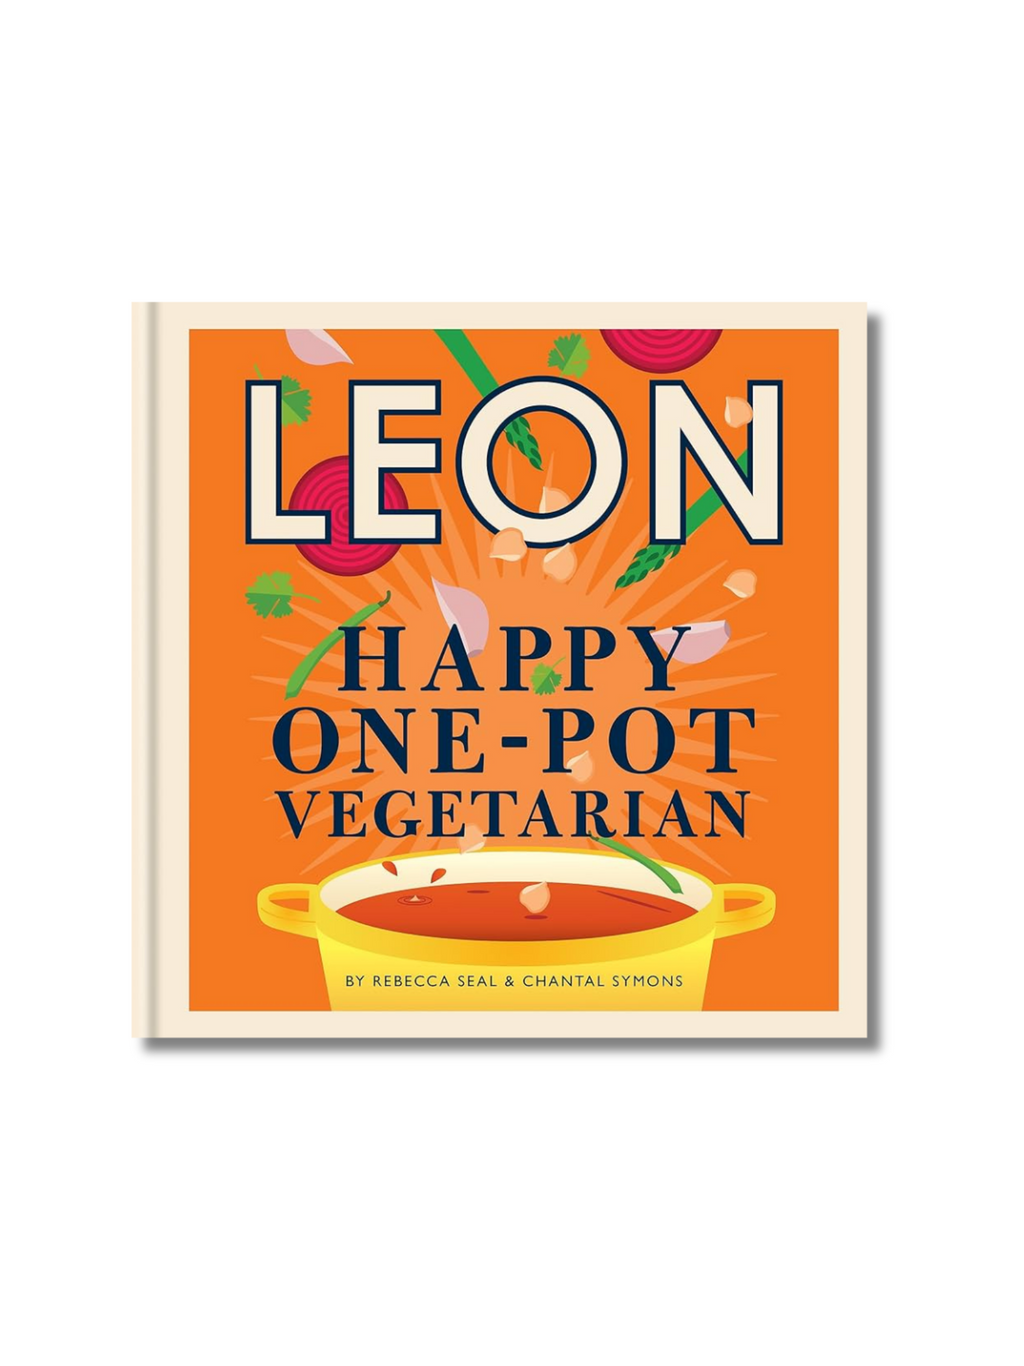 Leon: Happy One-pot Vegetarian